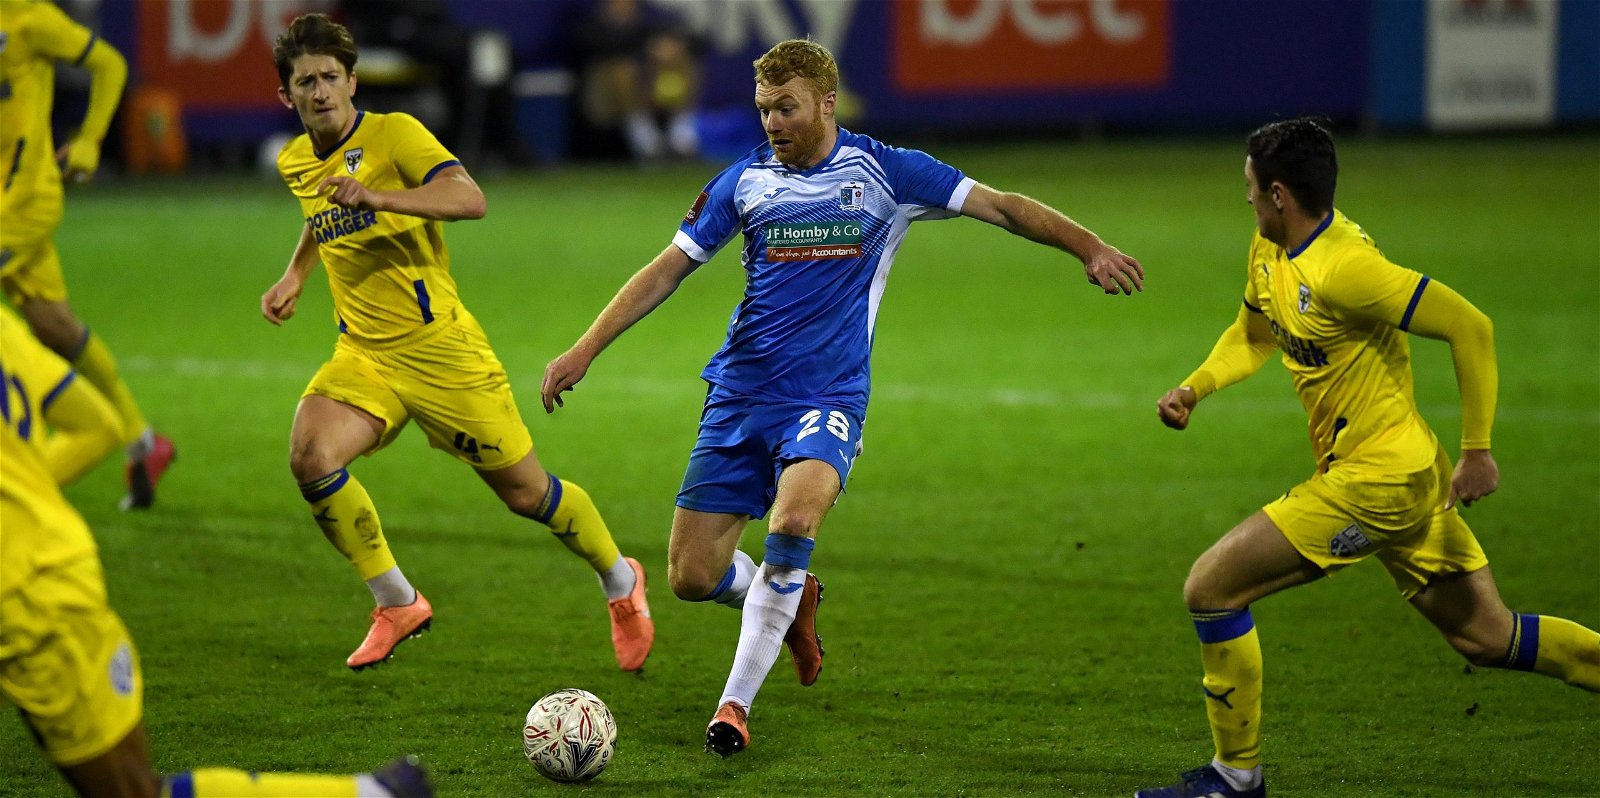 Barrow, Ex-Bolton Wanderers, Bradford City midfielder pens Barrow deal